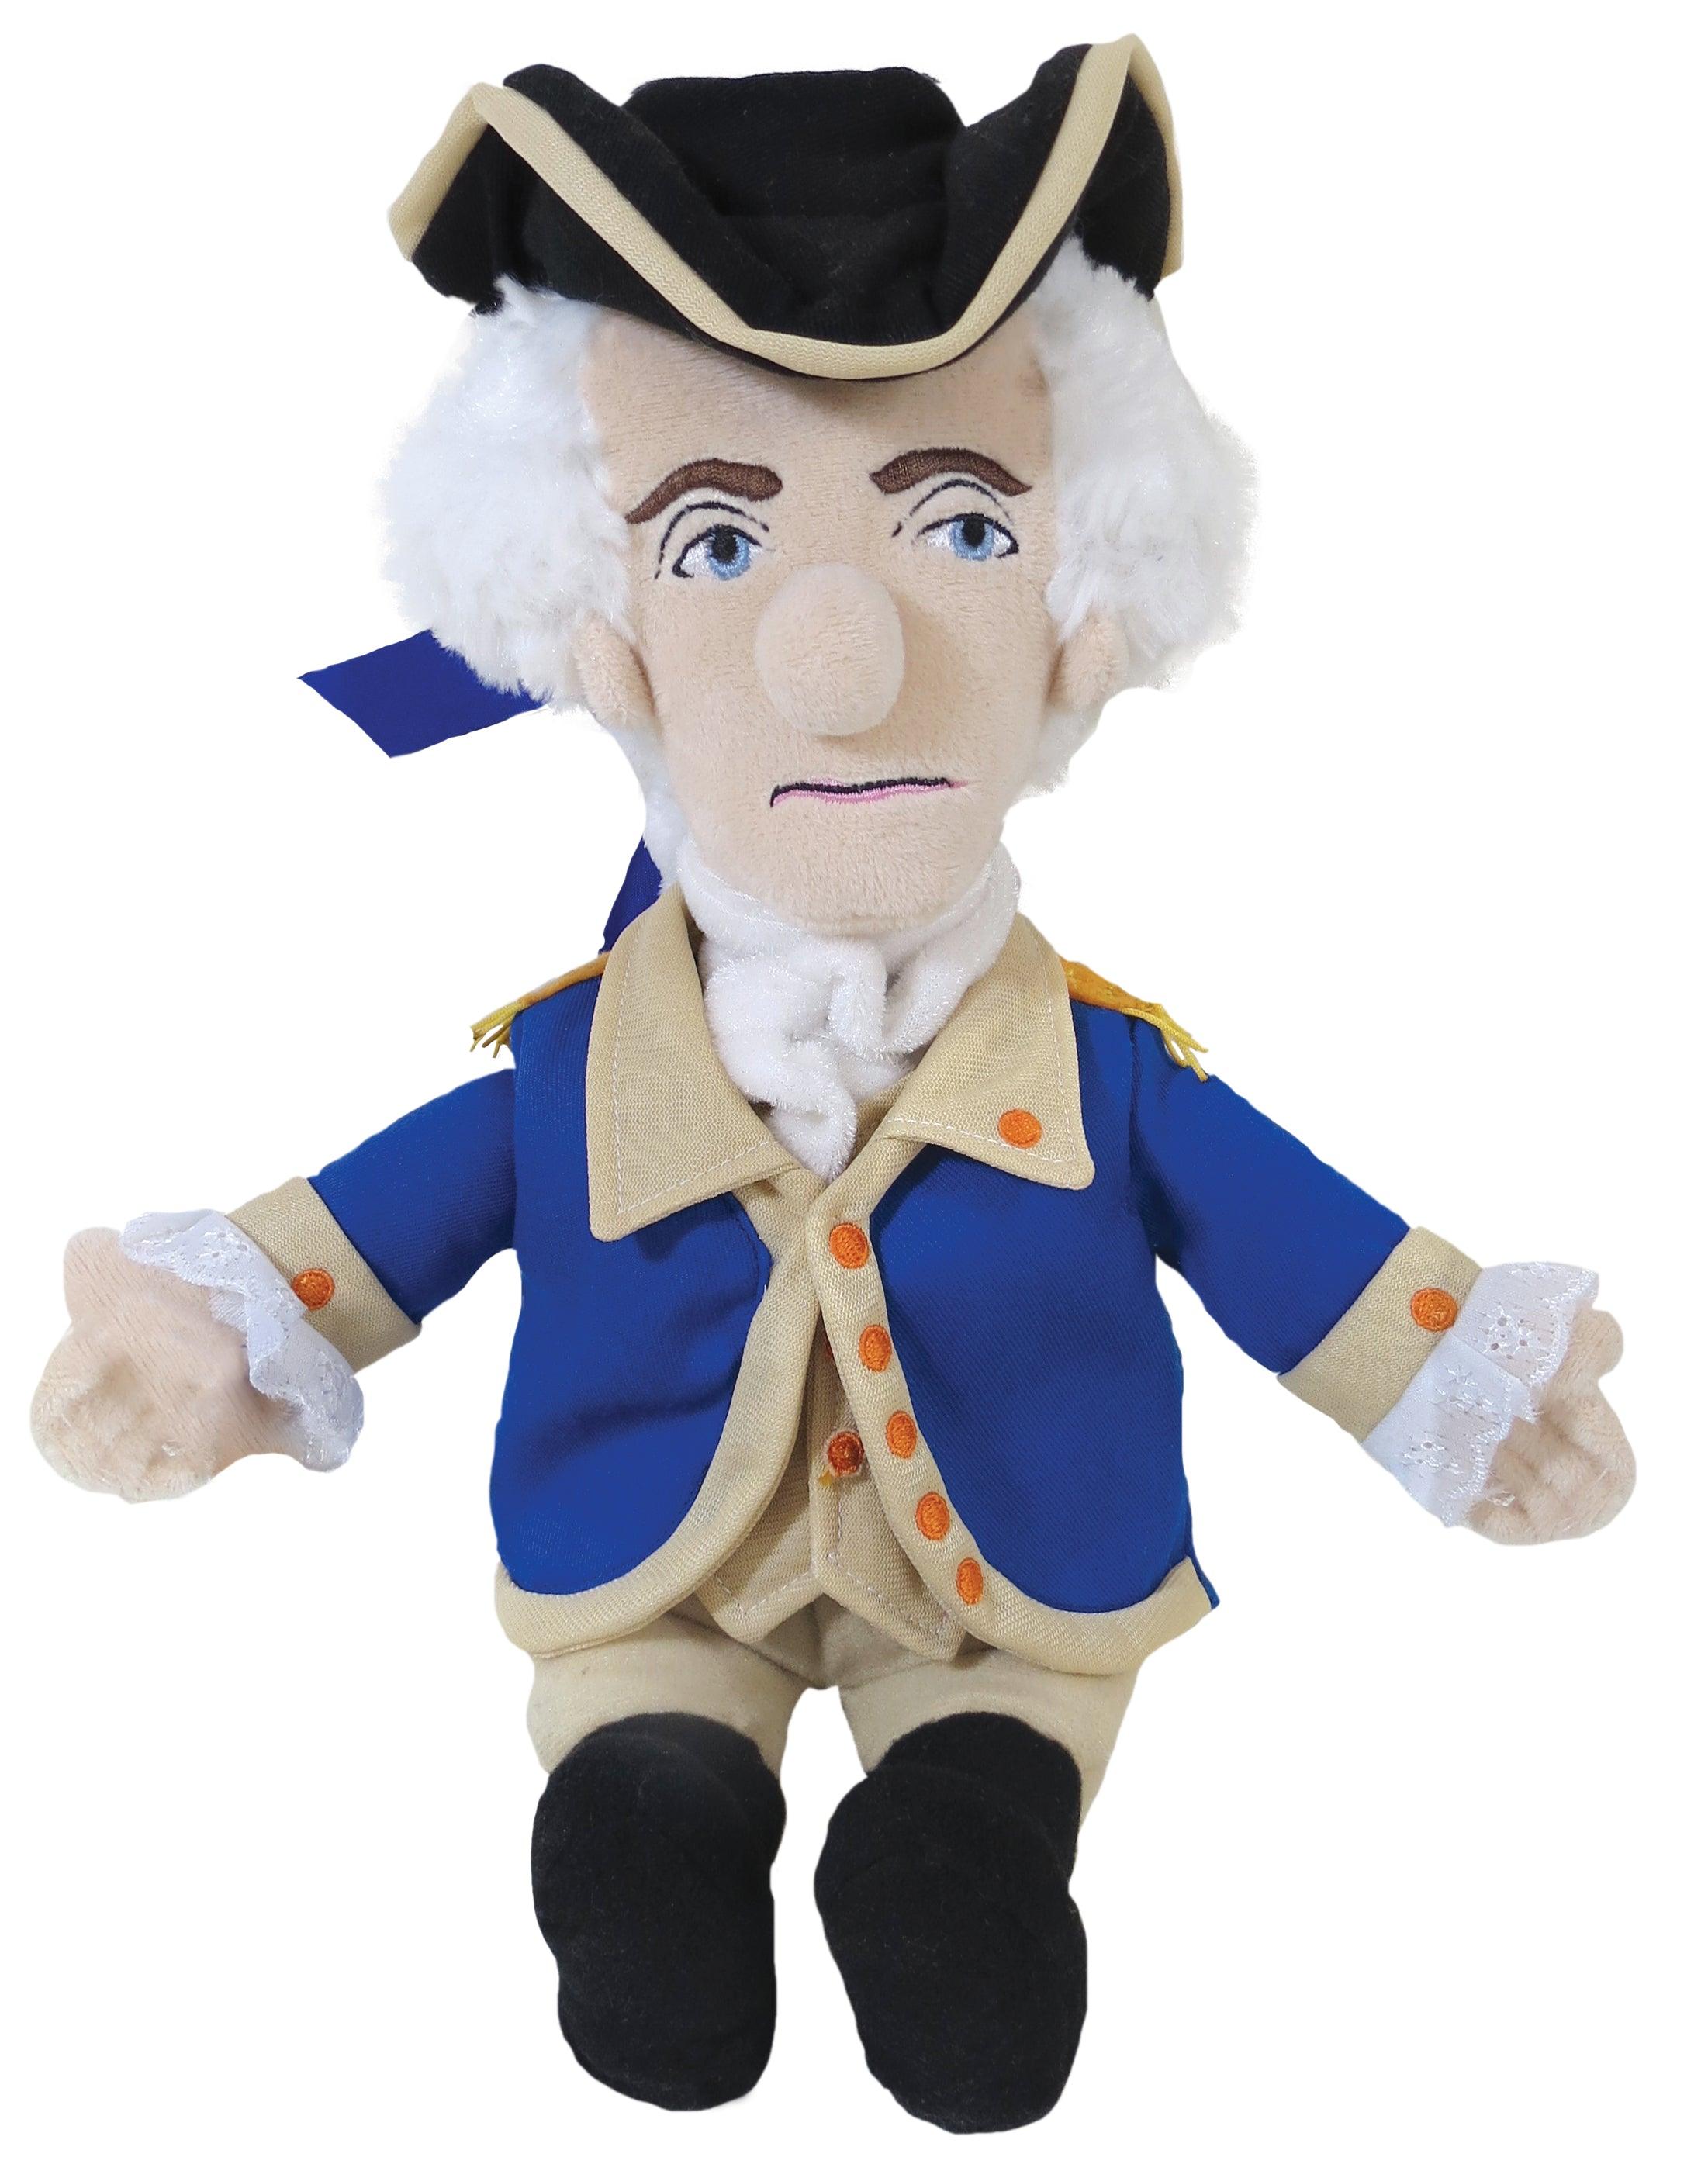 George Washington Plush Doll